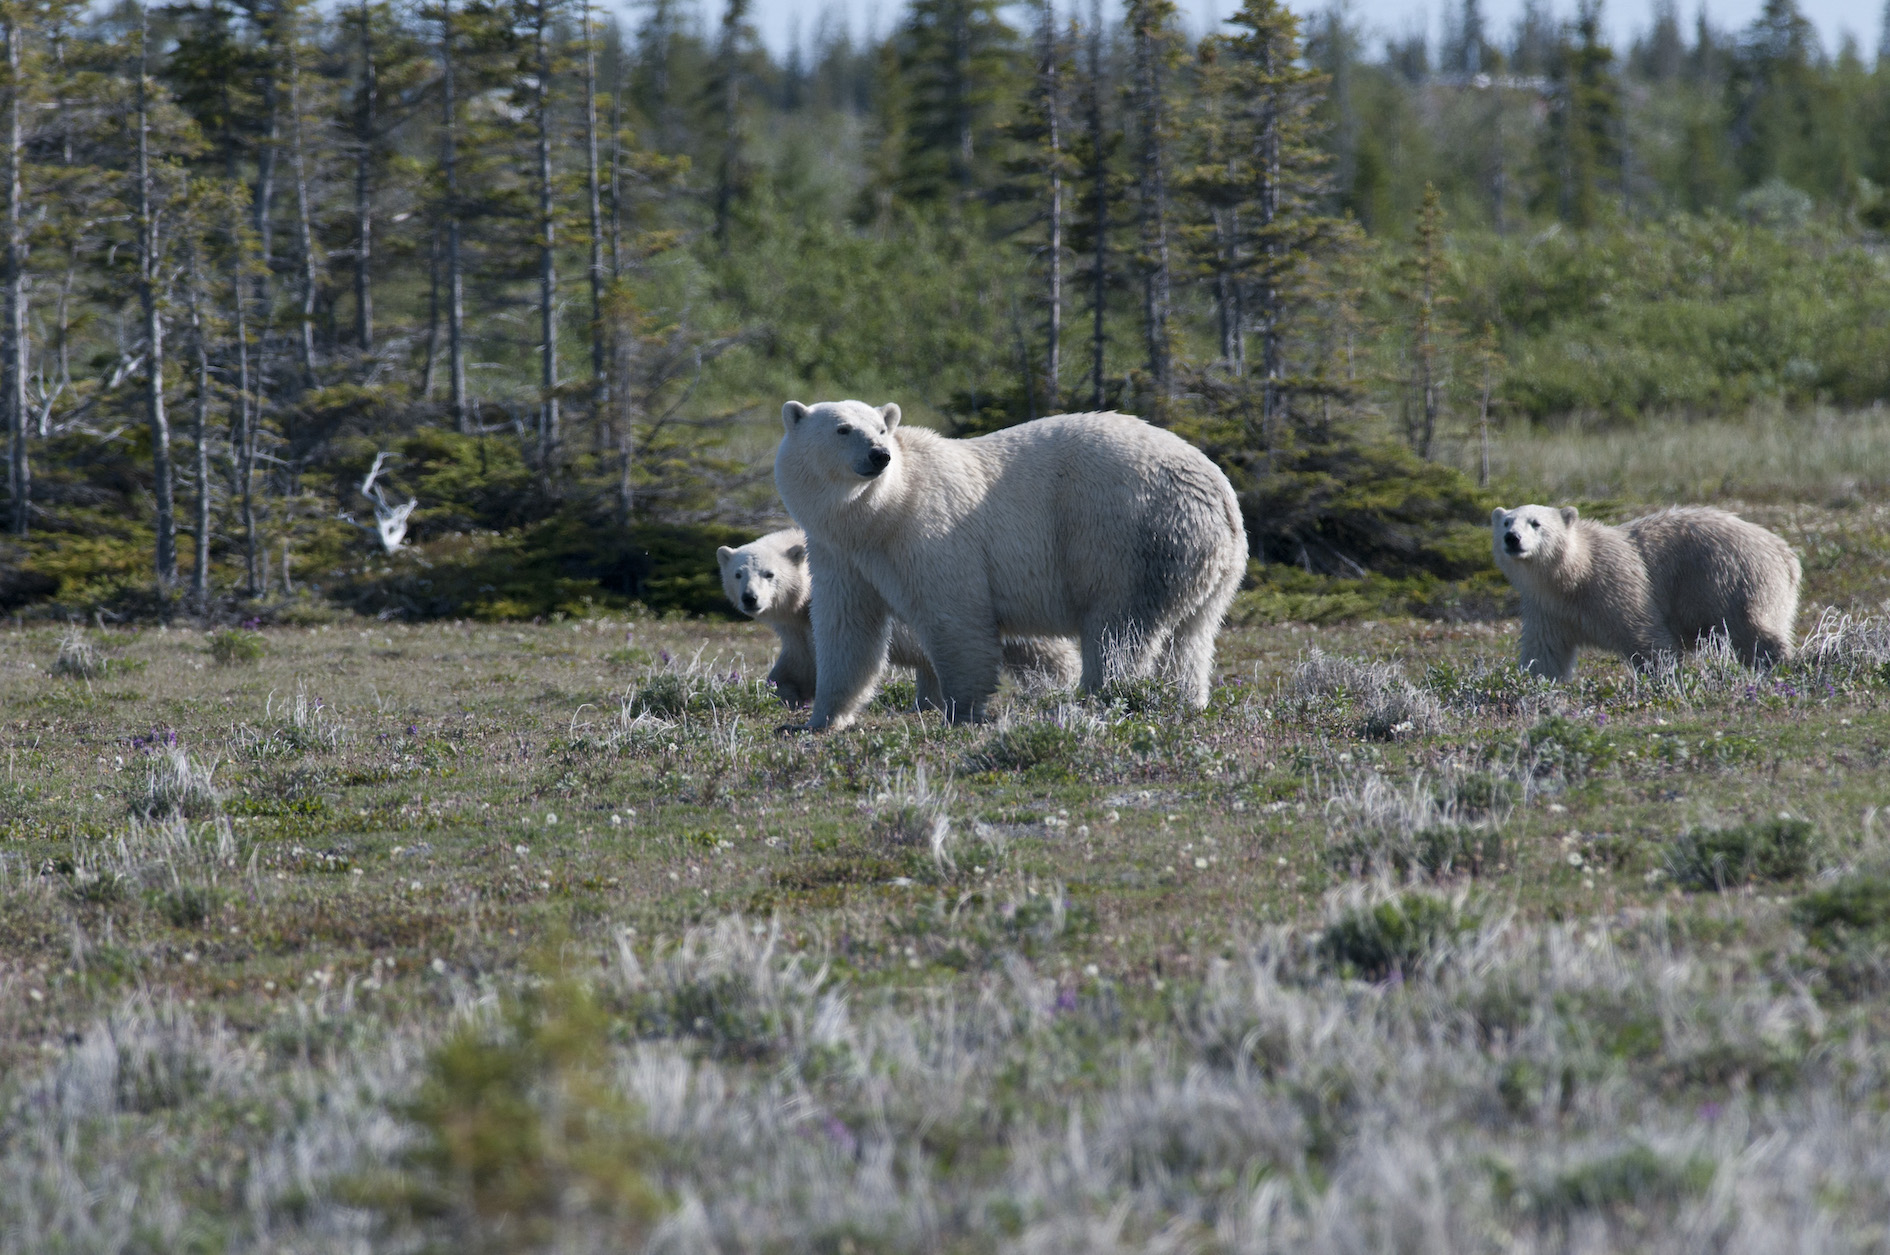 Three polar bears walk in a grassy field in northern Manitoba